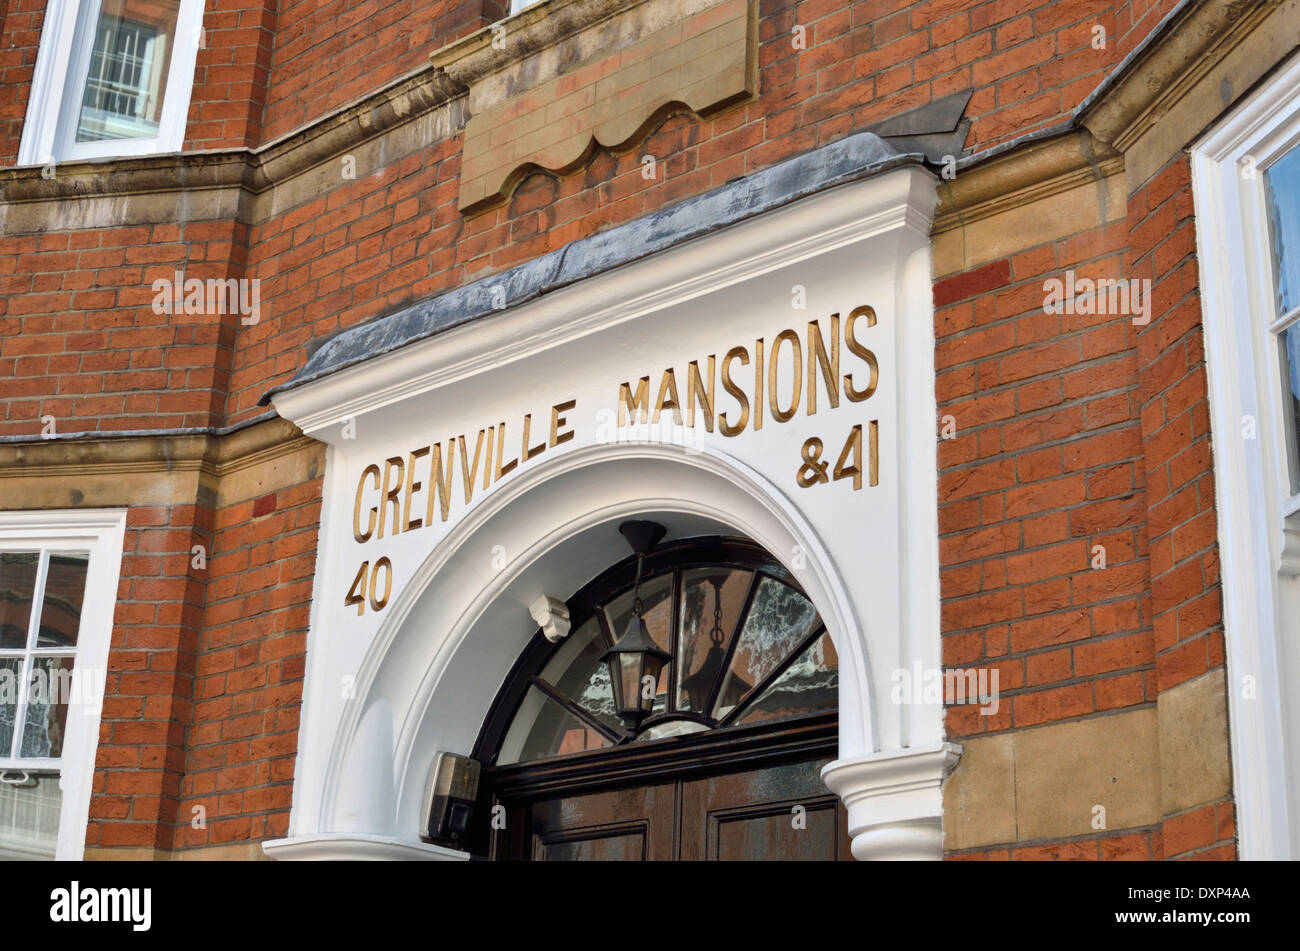 Grenville Mansions in Hunter Street, King’s Cross, London, UK. Stock Photo